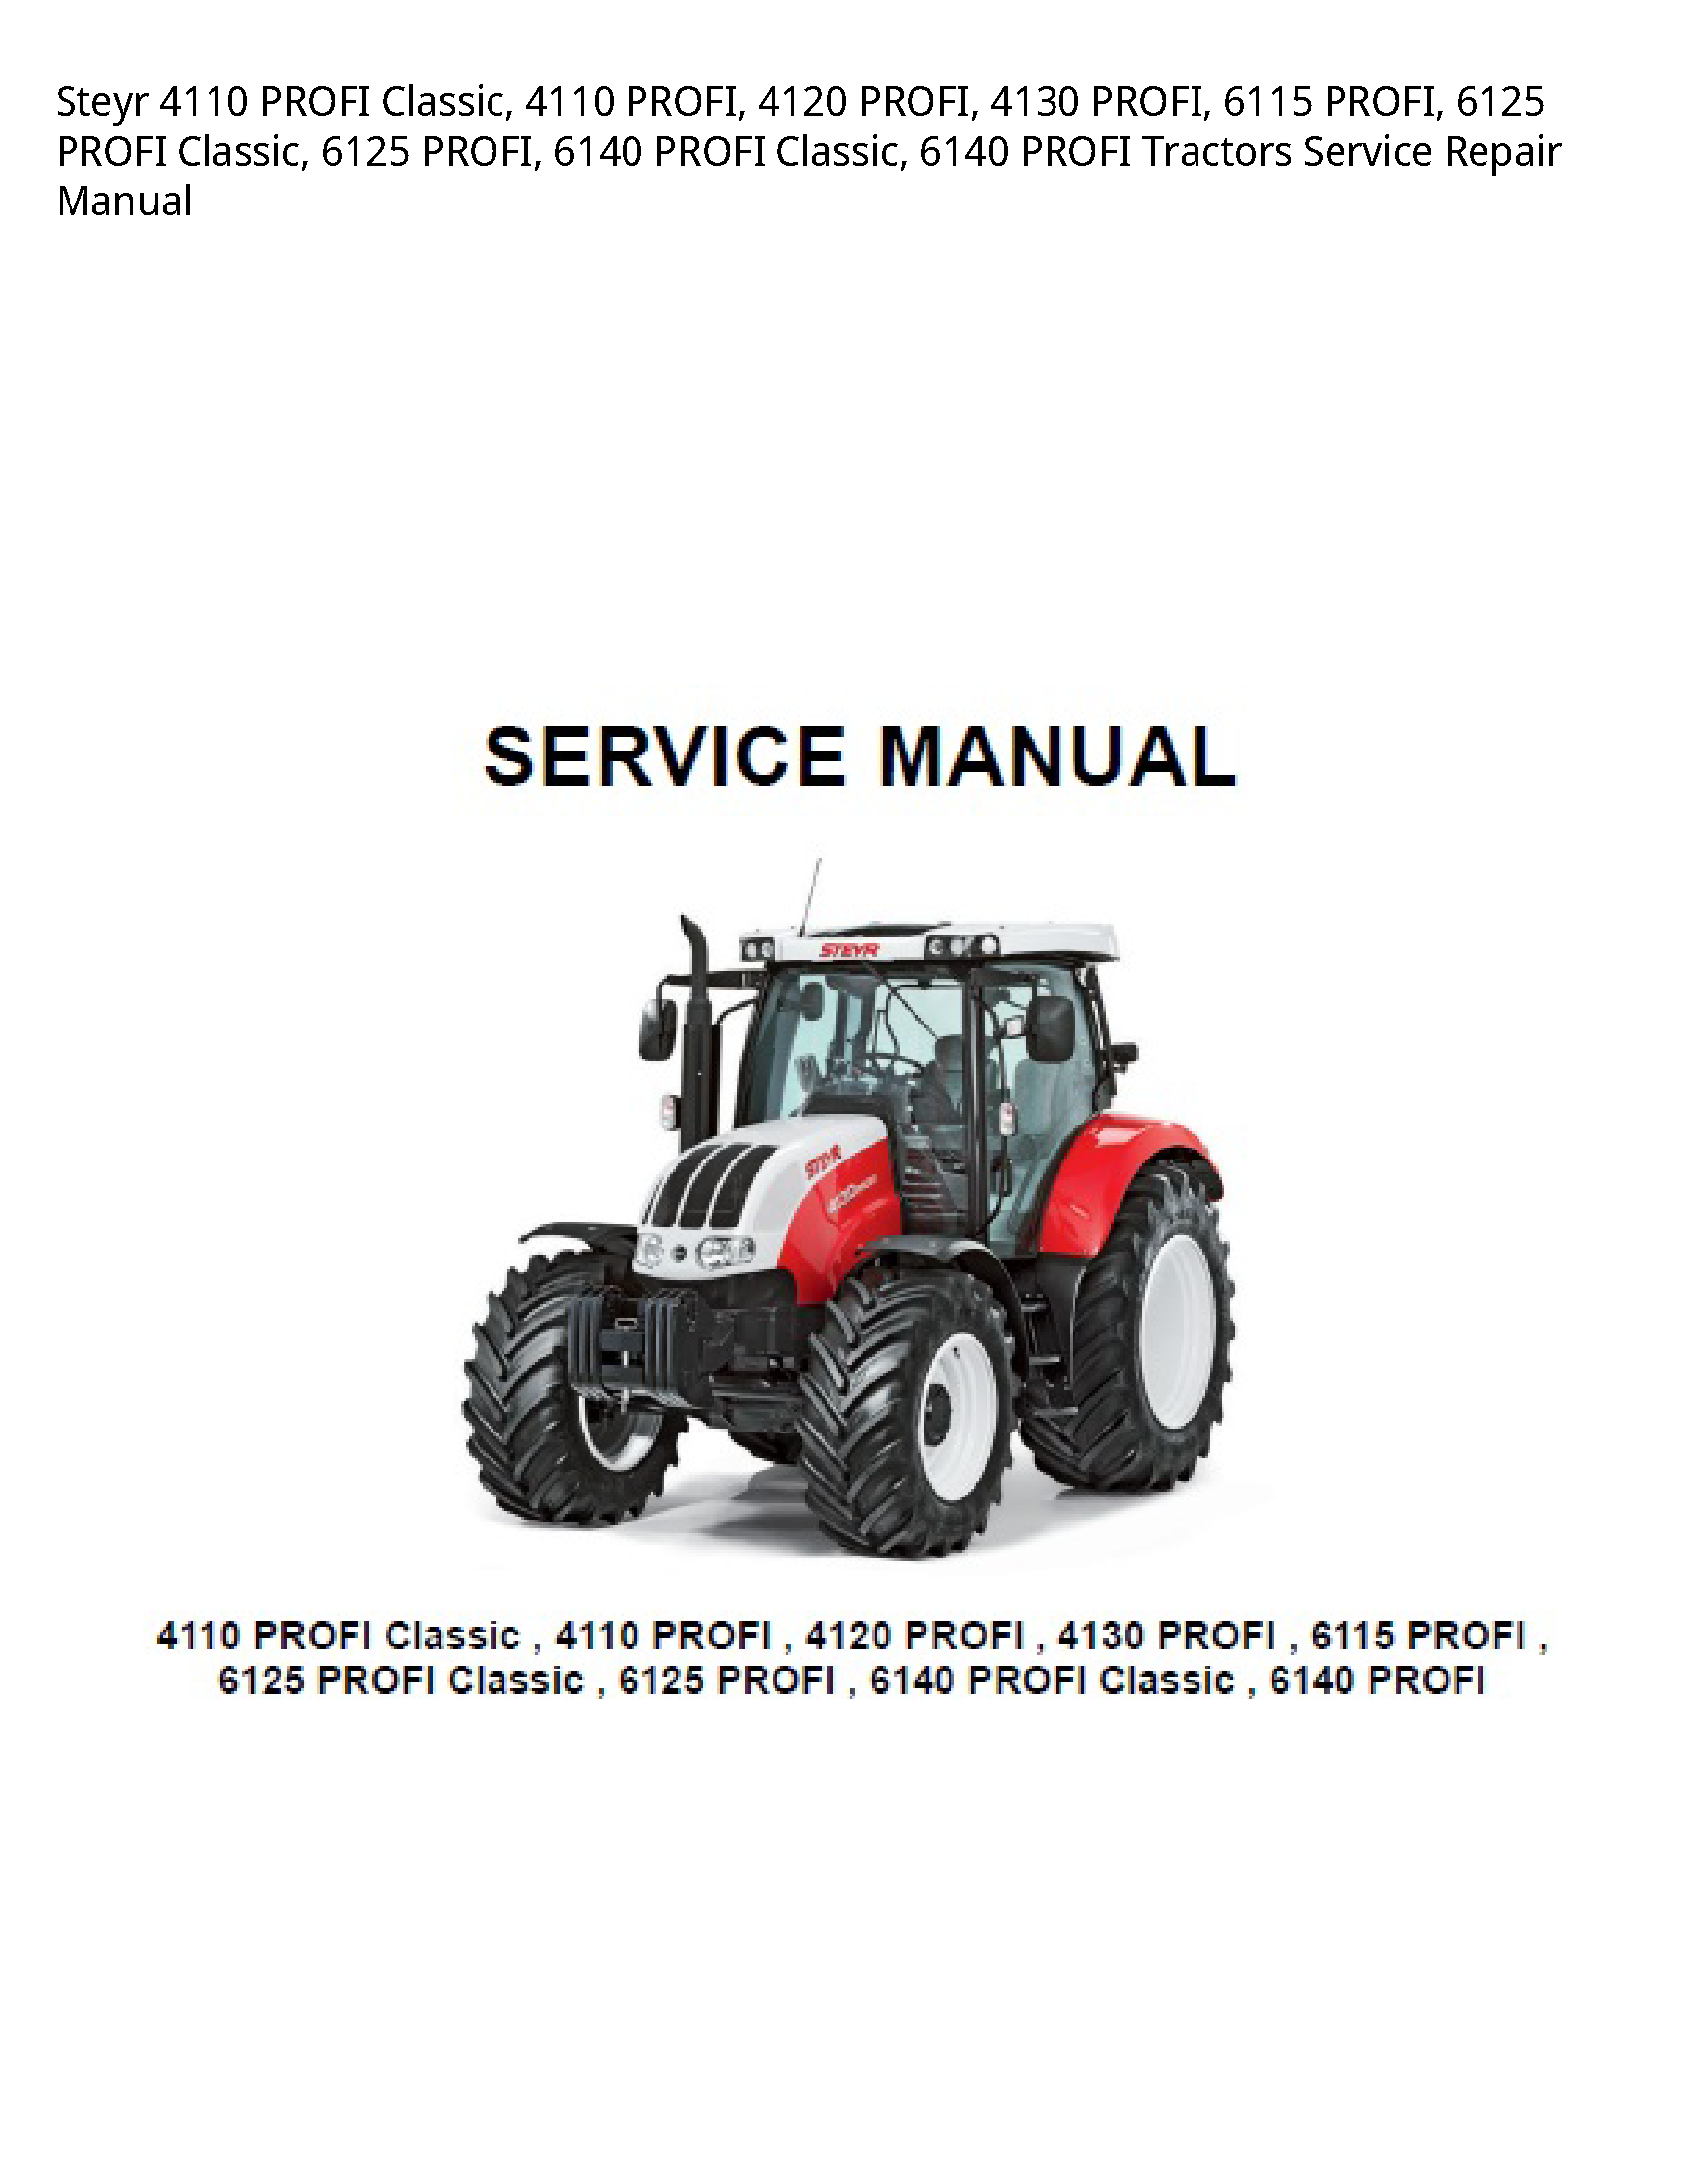 Steyr 4110 PROFI Classic manual